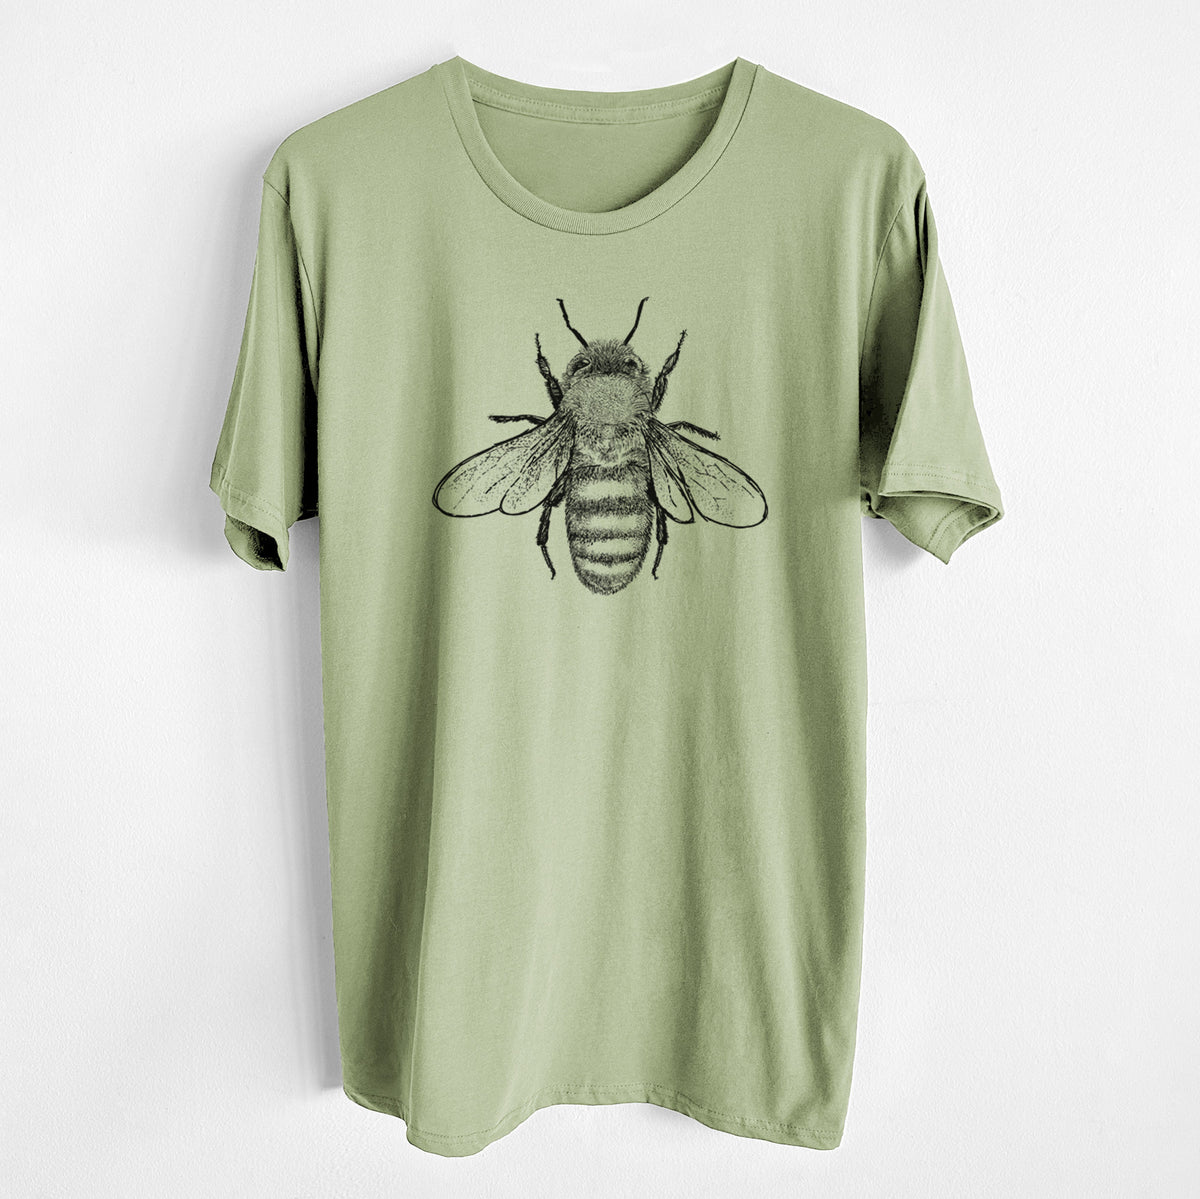 Apis Mellifera - Honey Bee - Unisex Crewneck - Made in USA - 100% Organic Cotton